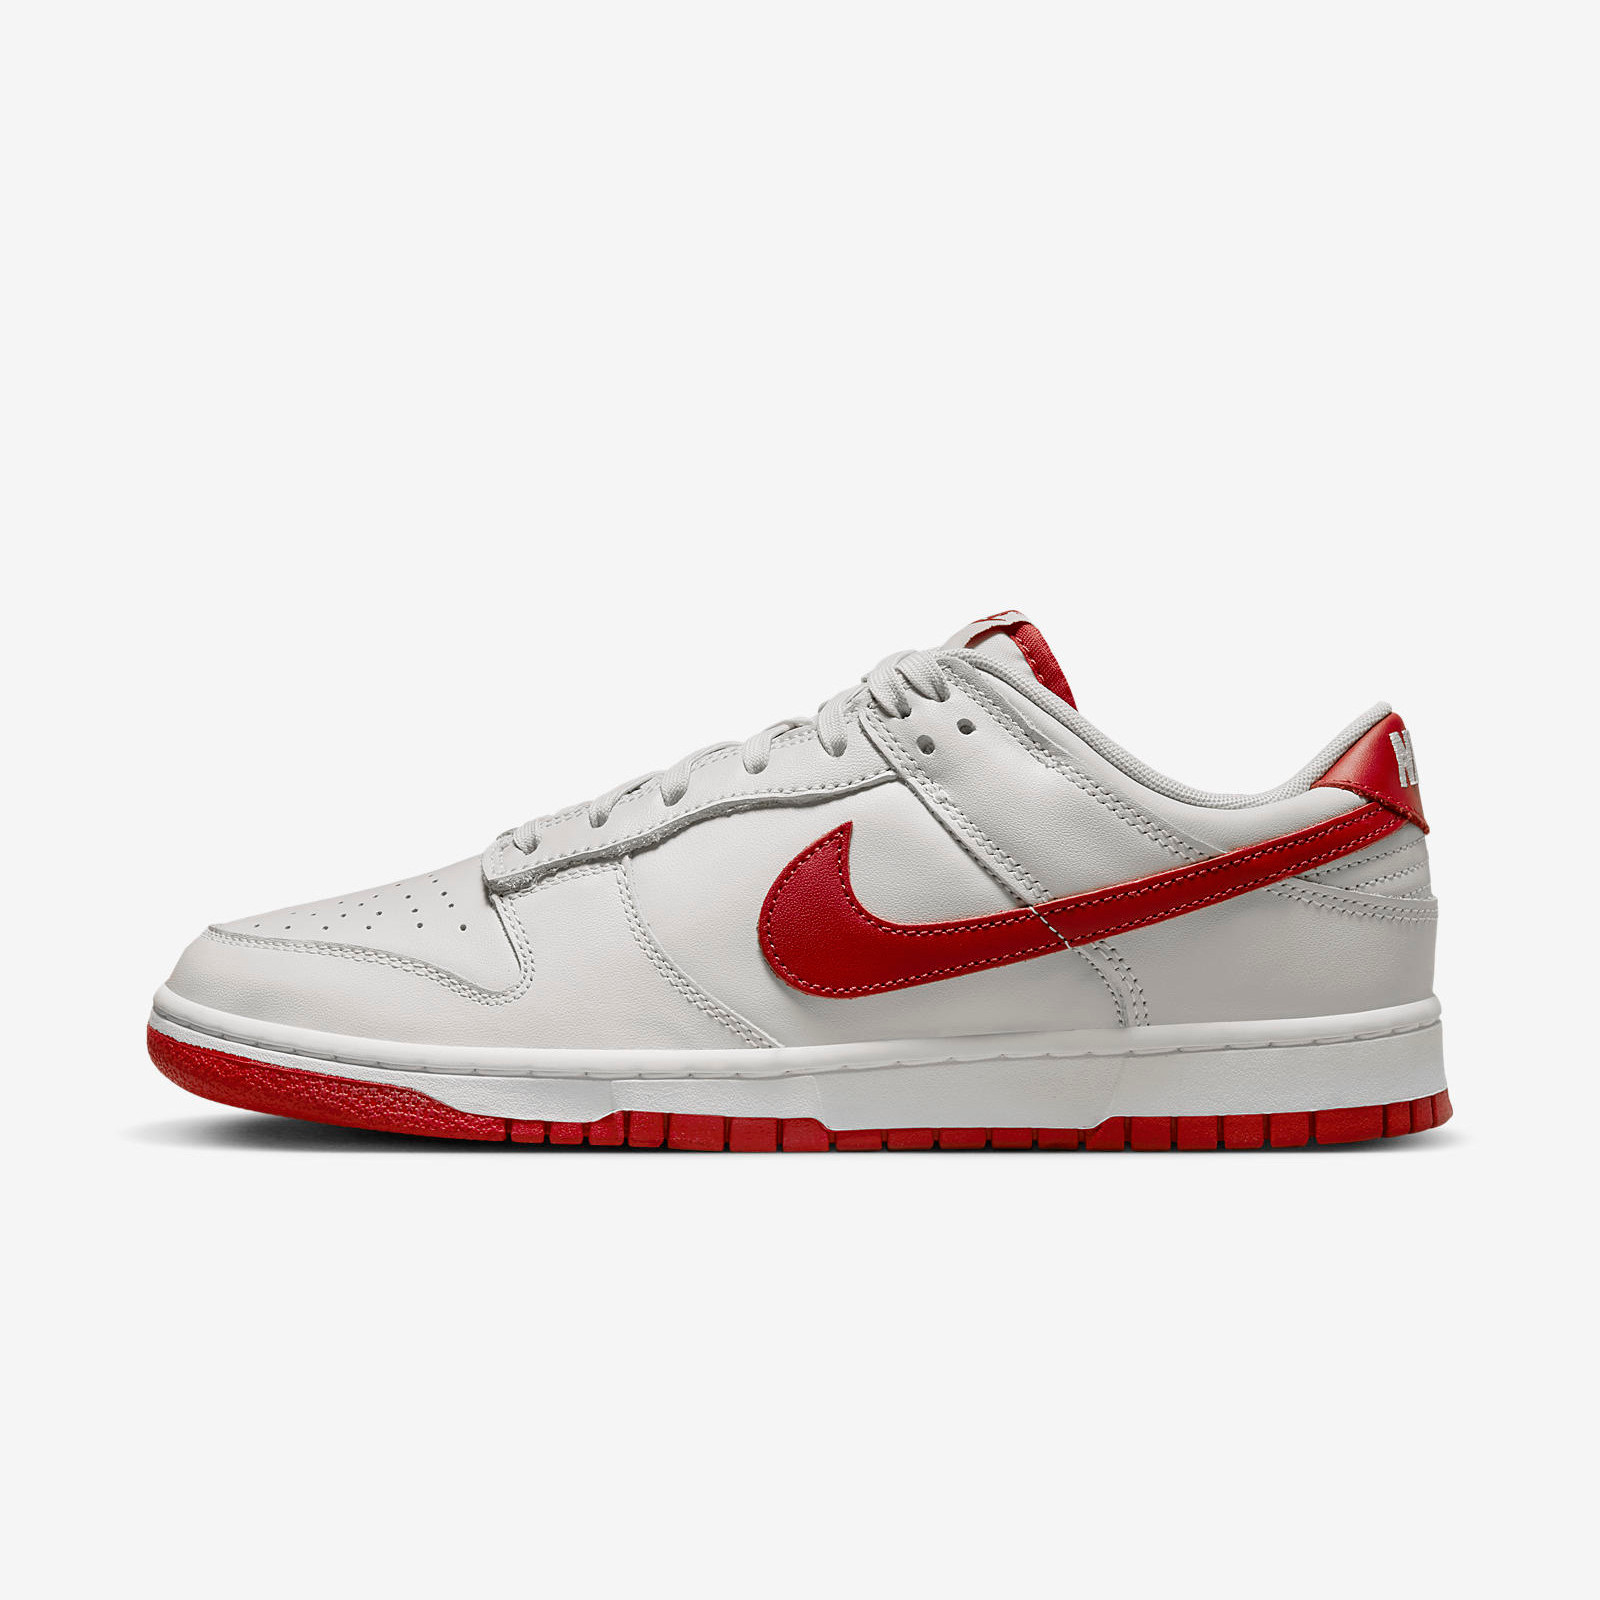 Nike Dunk Low
Grey / Red